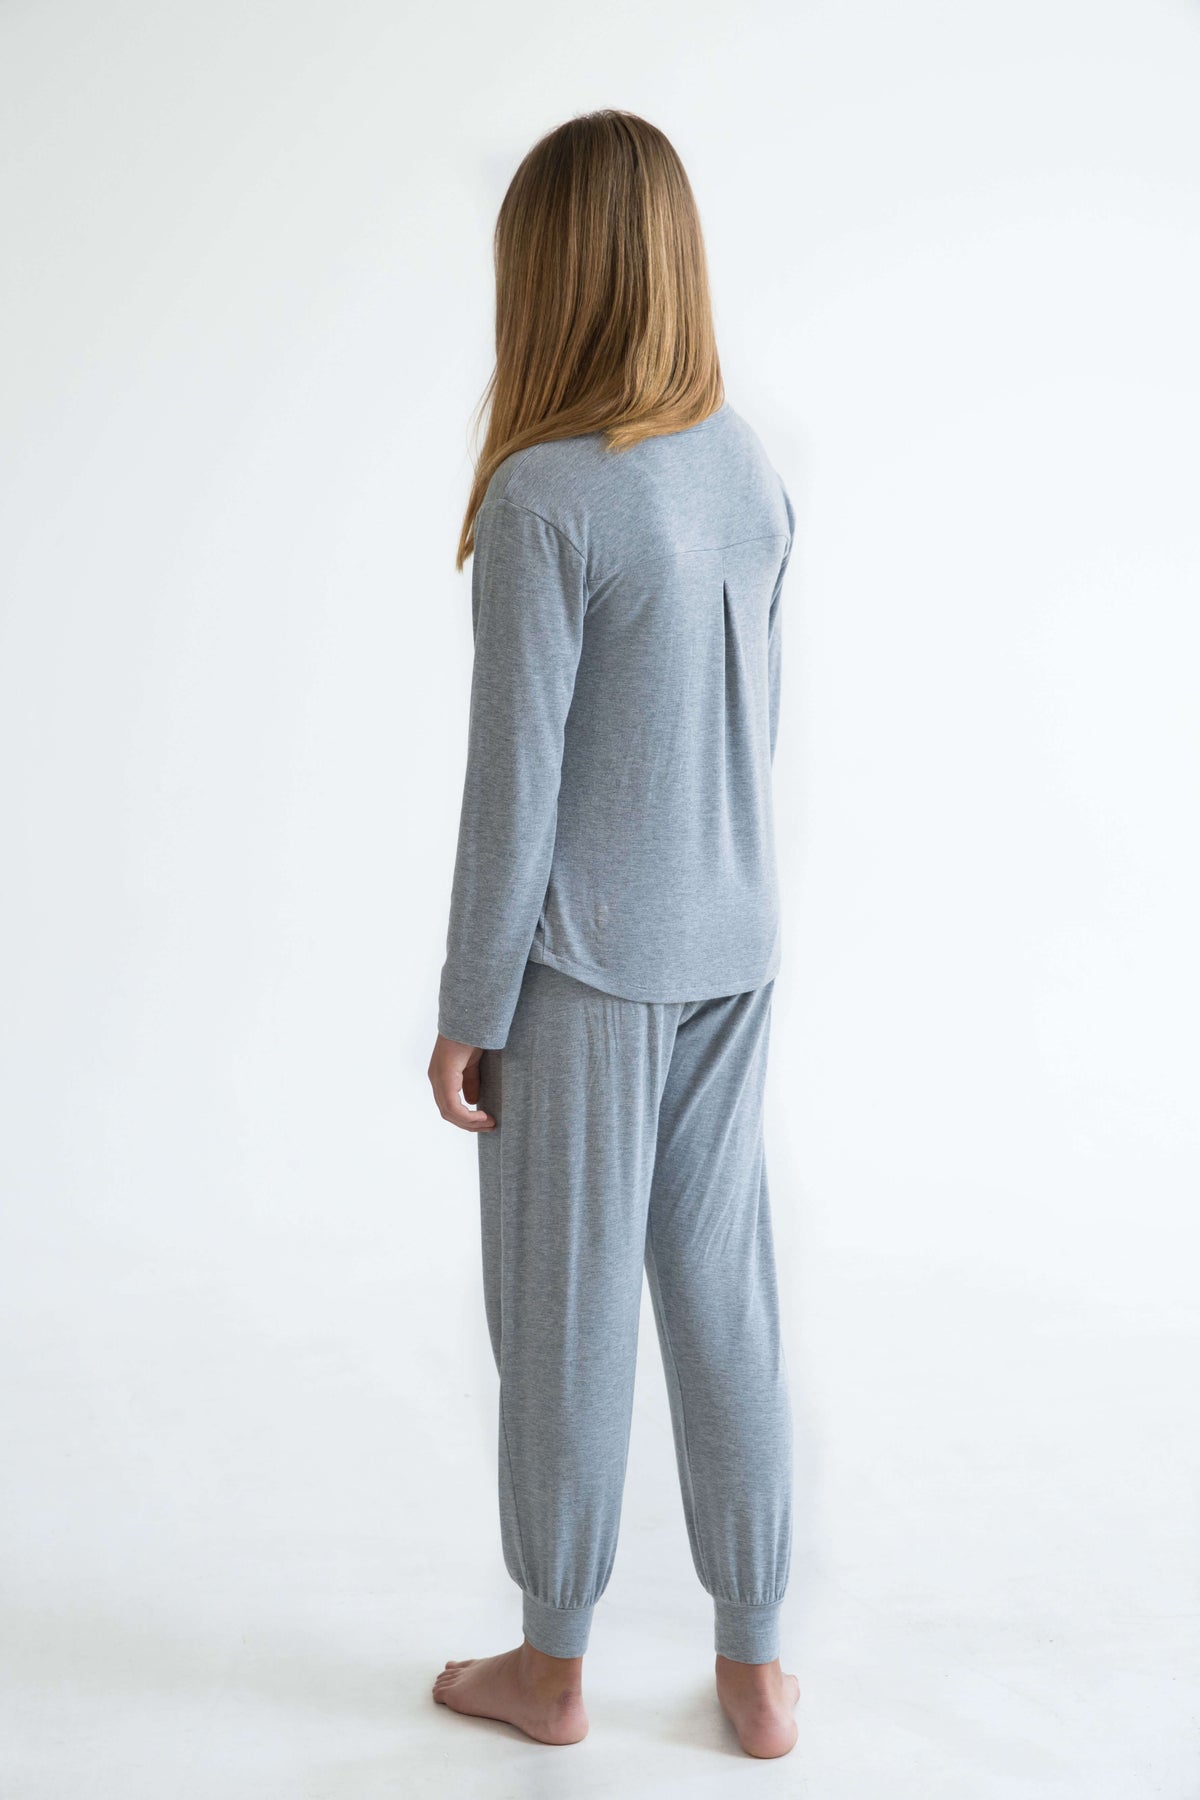 grey girls winter pyjamas set long pants and long sleeve top by Love Haidee Australia back